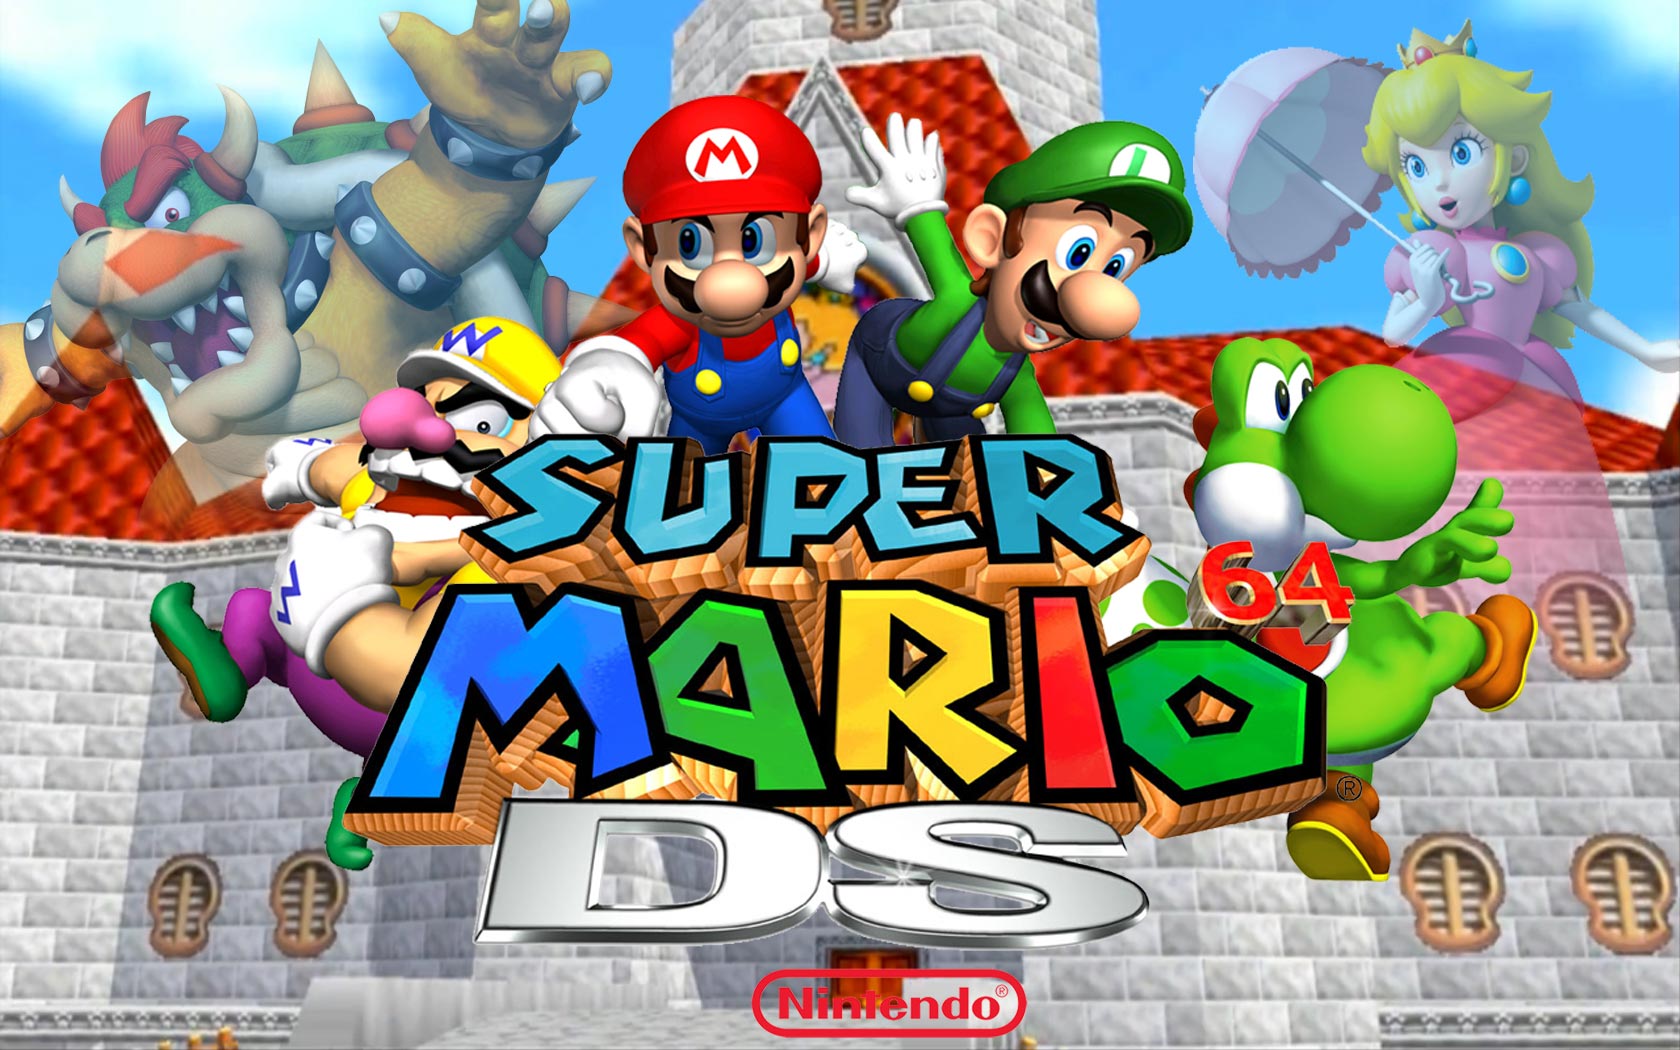 Super-Mario-64-DS-Widescreen-Wallpaper.jpg